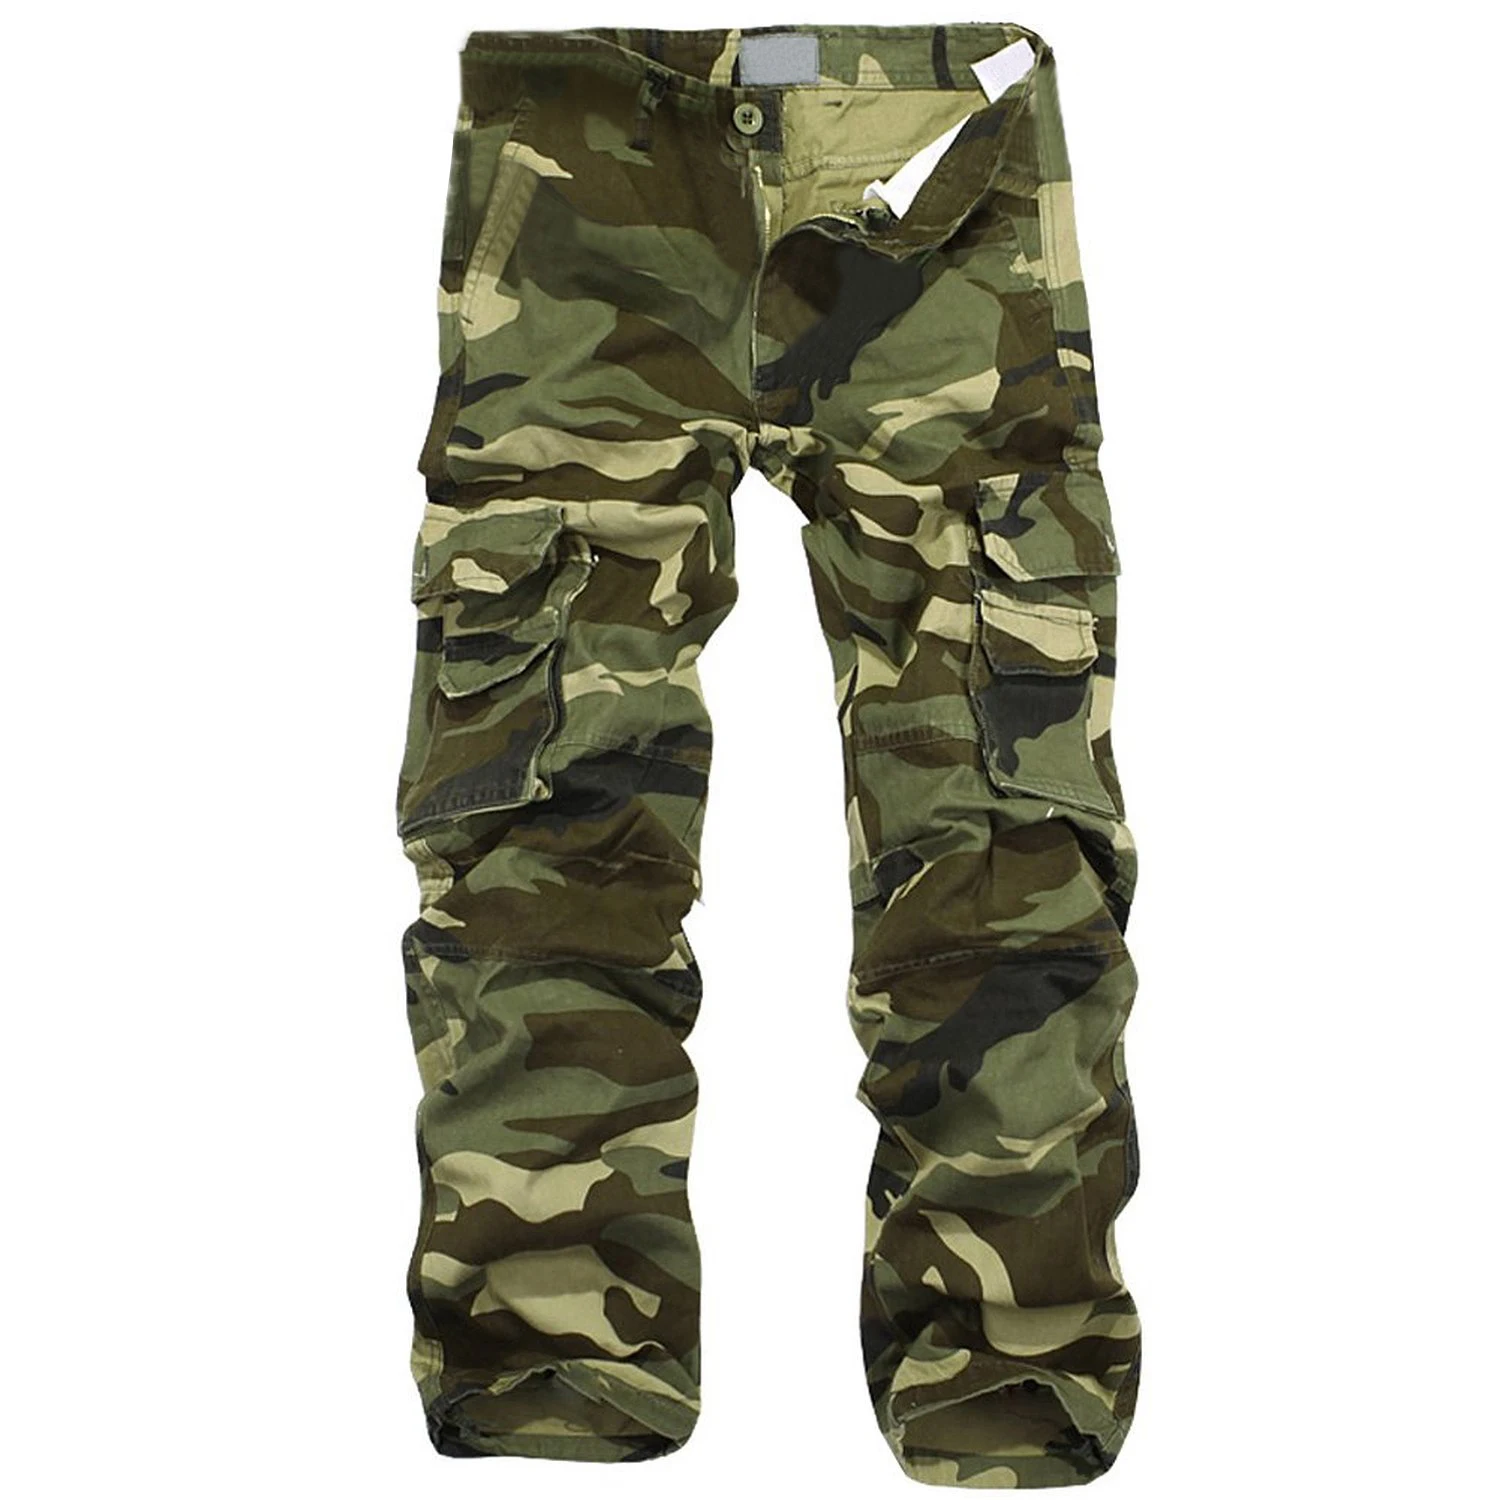 Aliexpress.com : Buy Multi pocket Military Cargo Pants Casual Men's ...